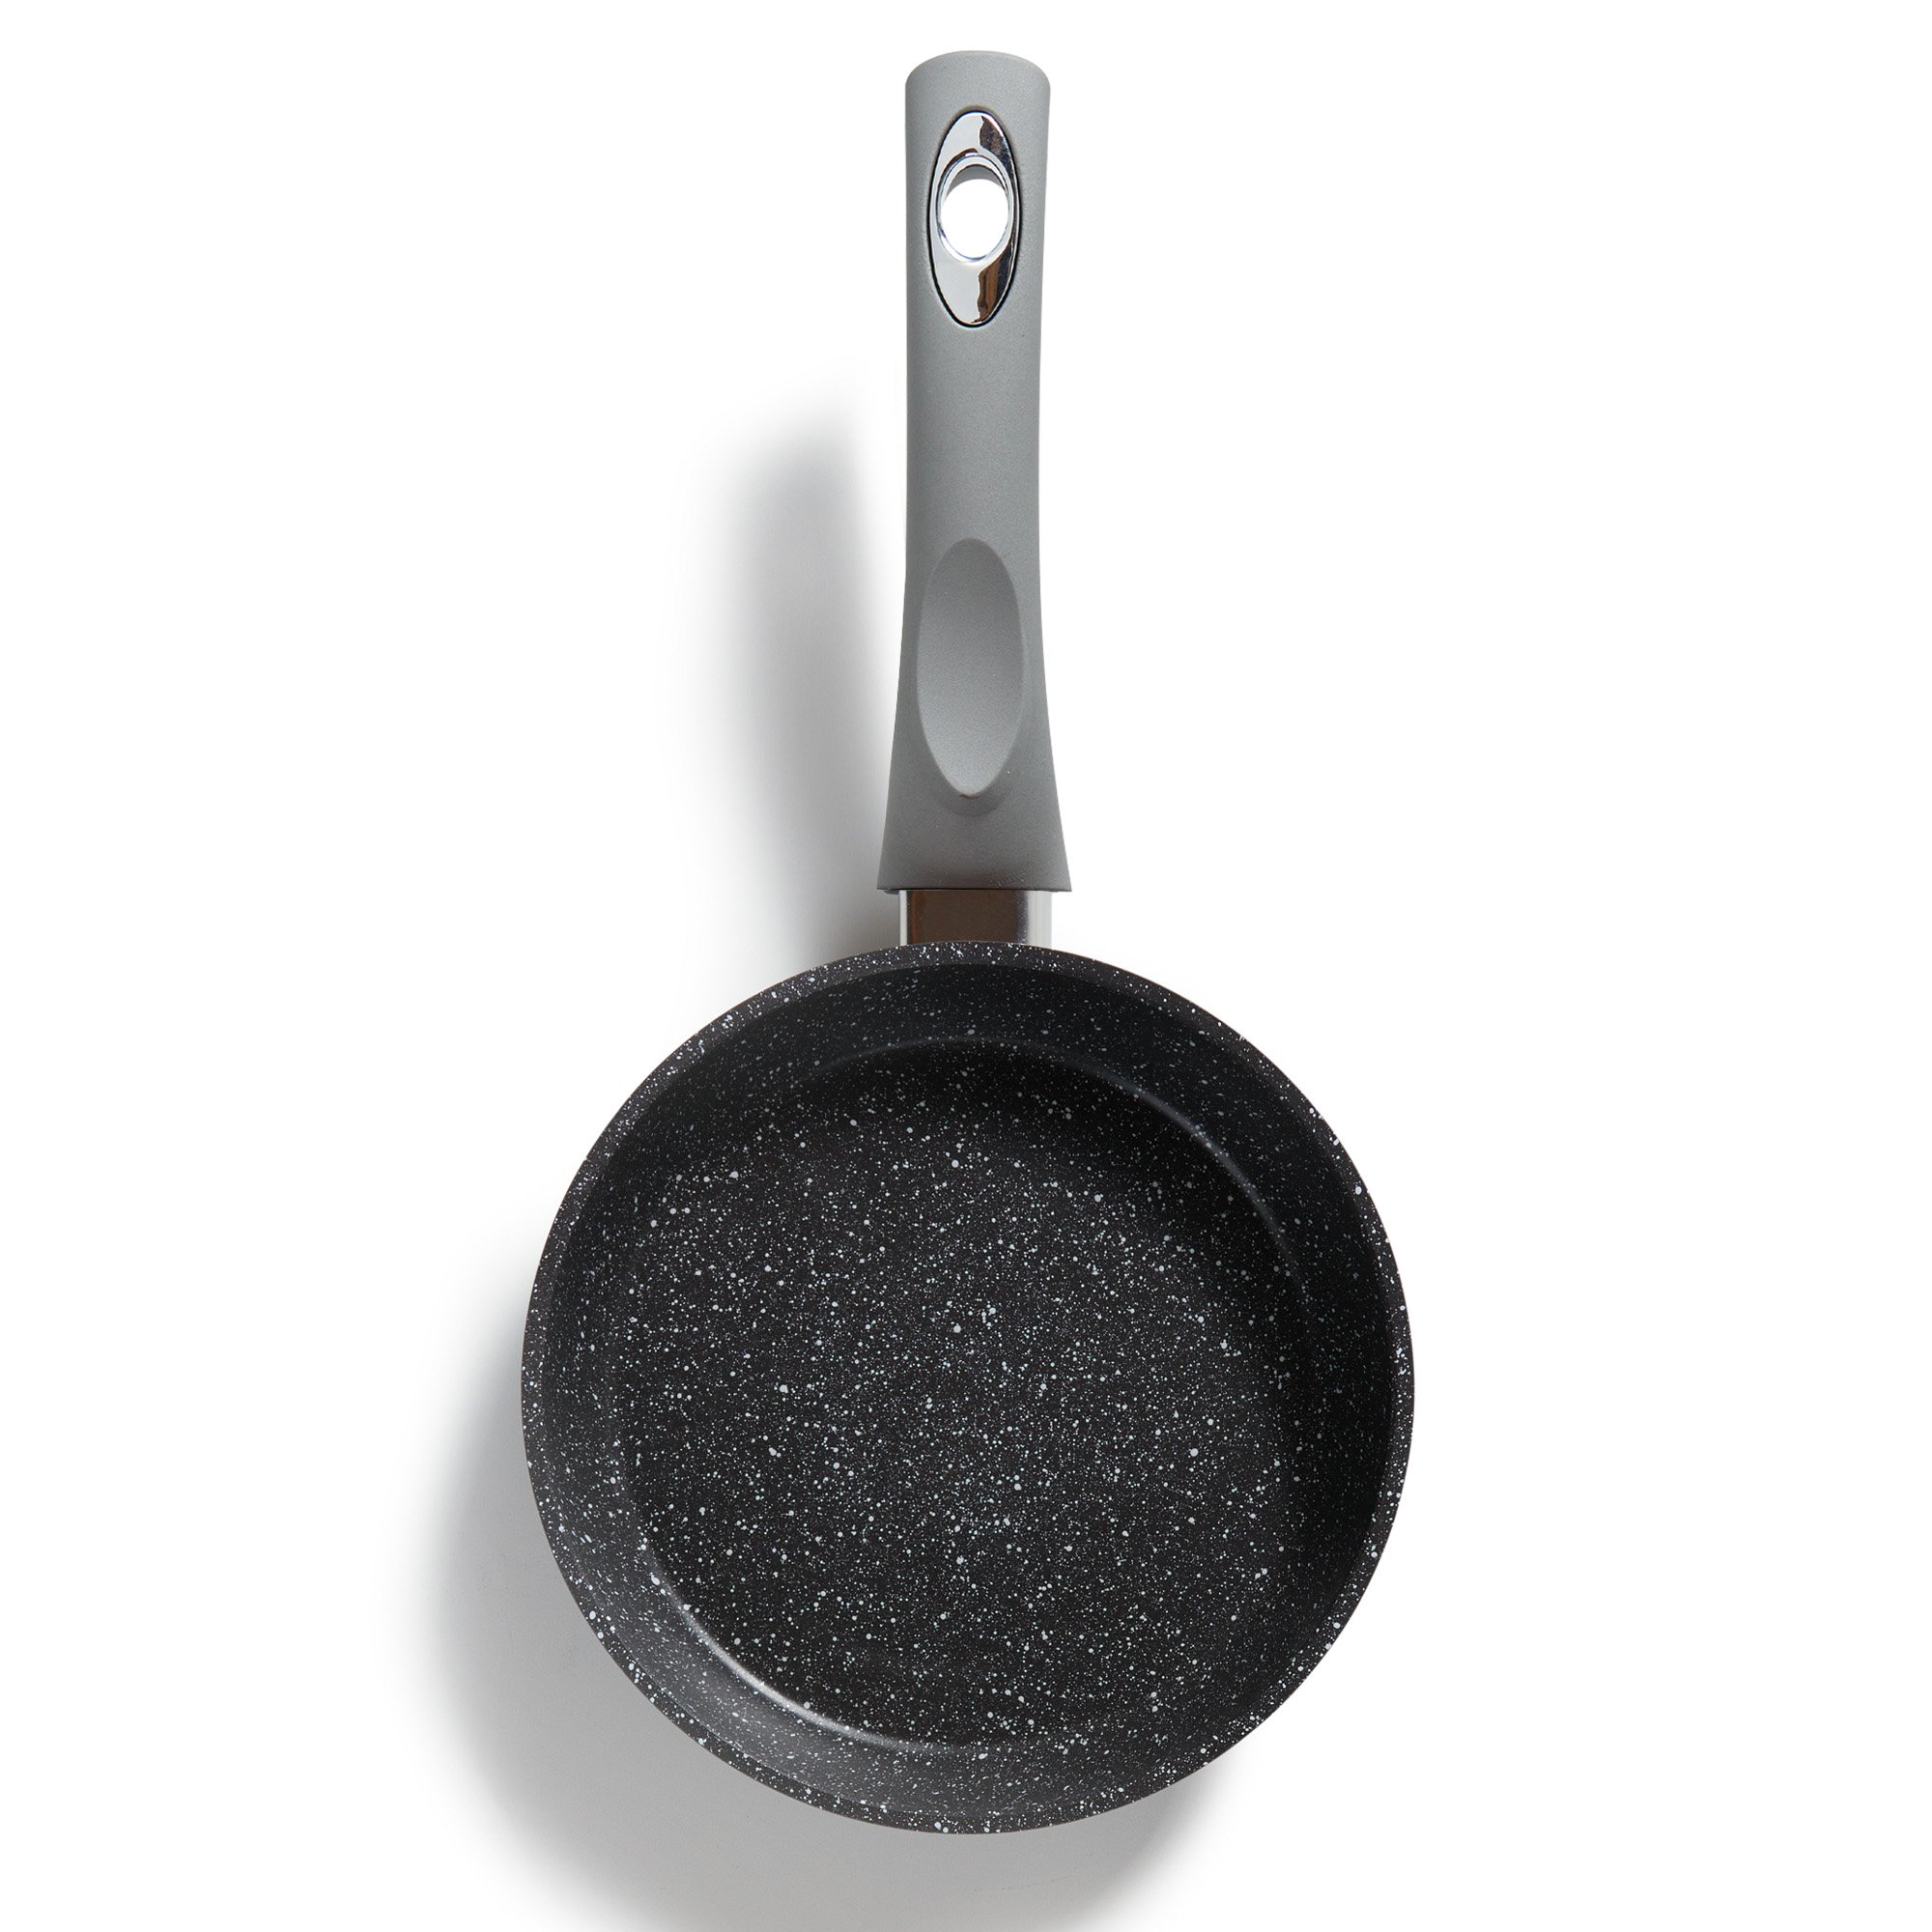 STONELINE® Frying Pan 18 cm, Non-Stick Pan | GOURMUNDO